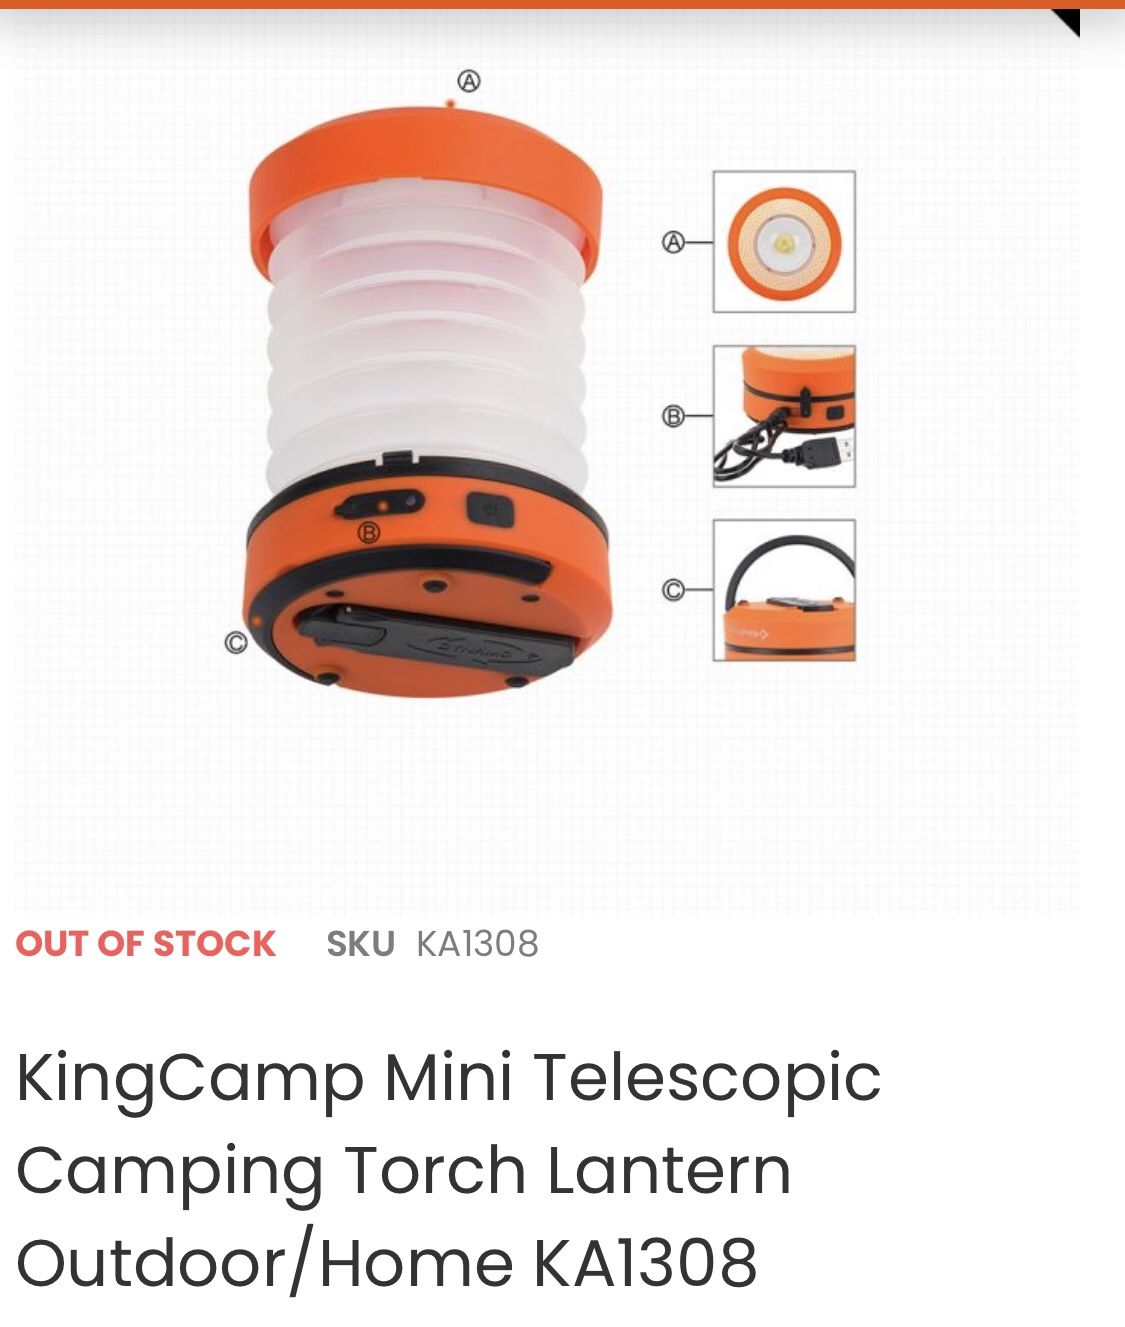 Camping torch lantern outdoors/indoor mini telescopic camping, hiking lantern- brand new